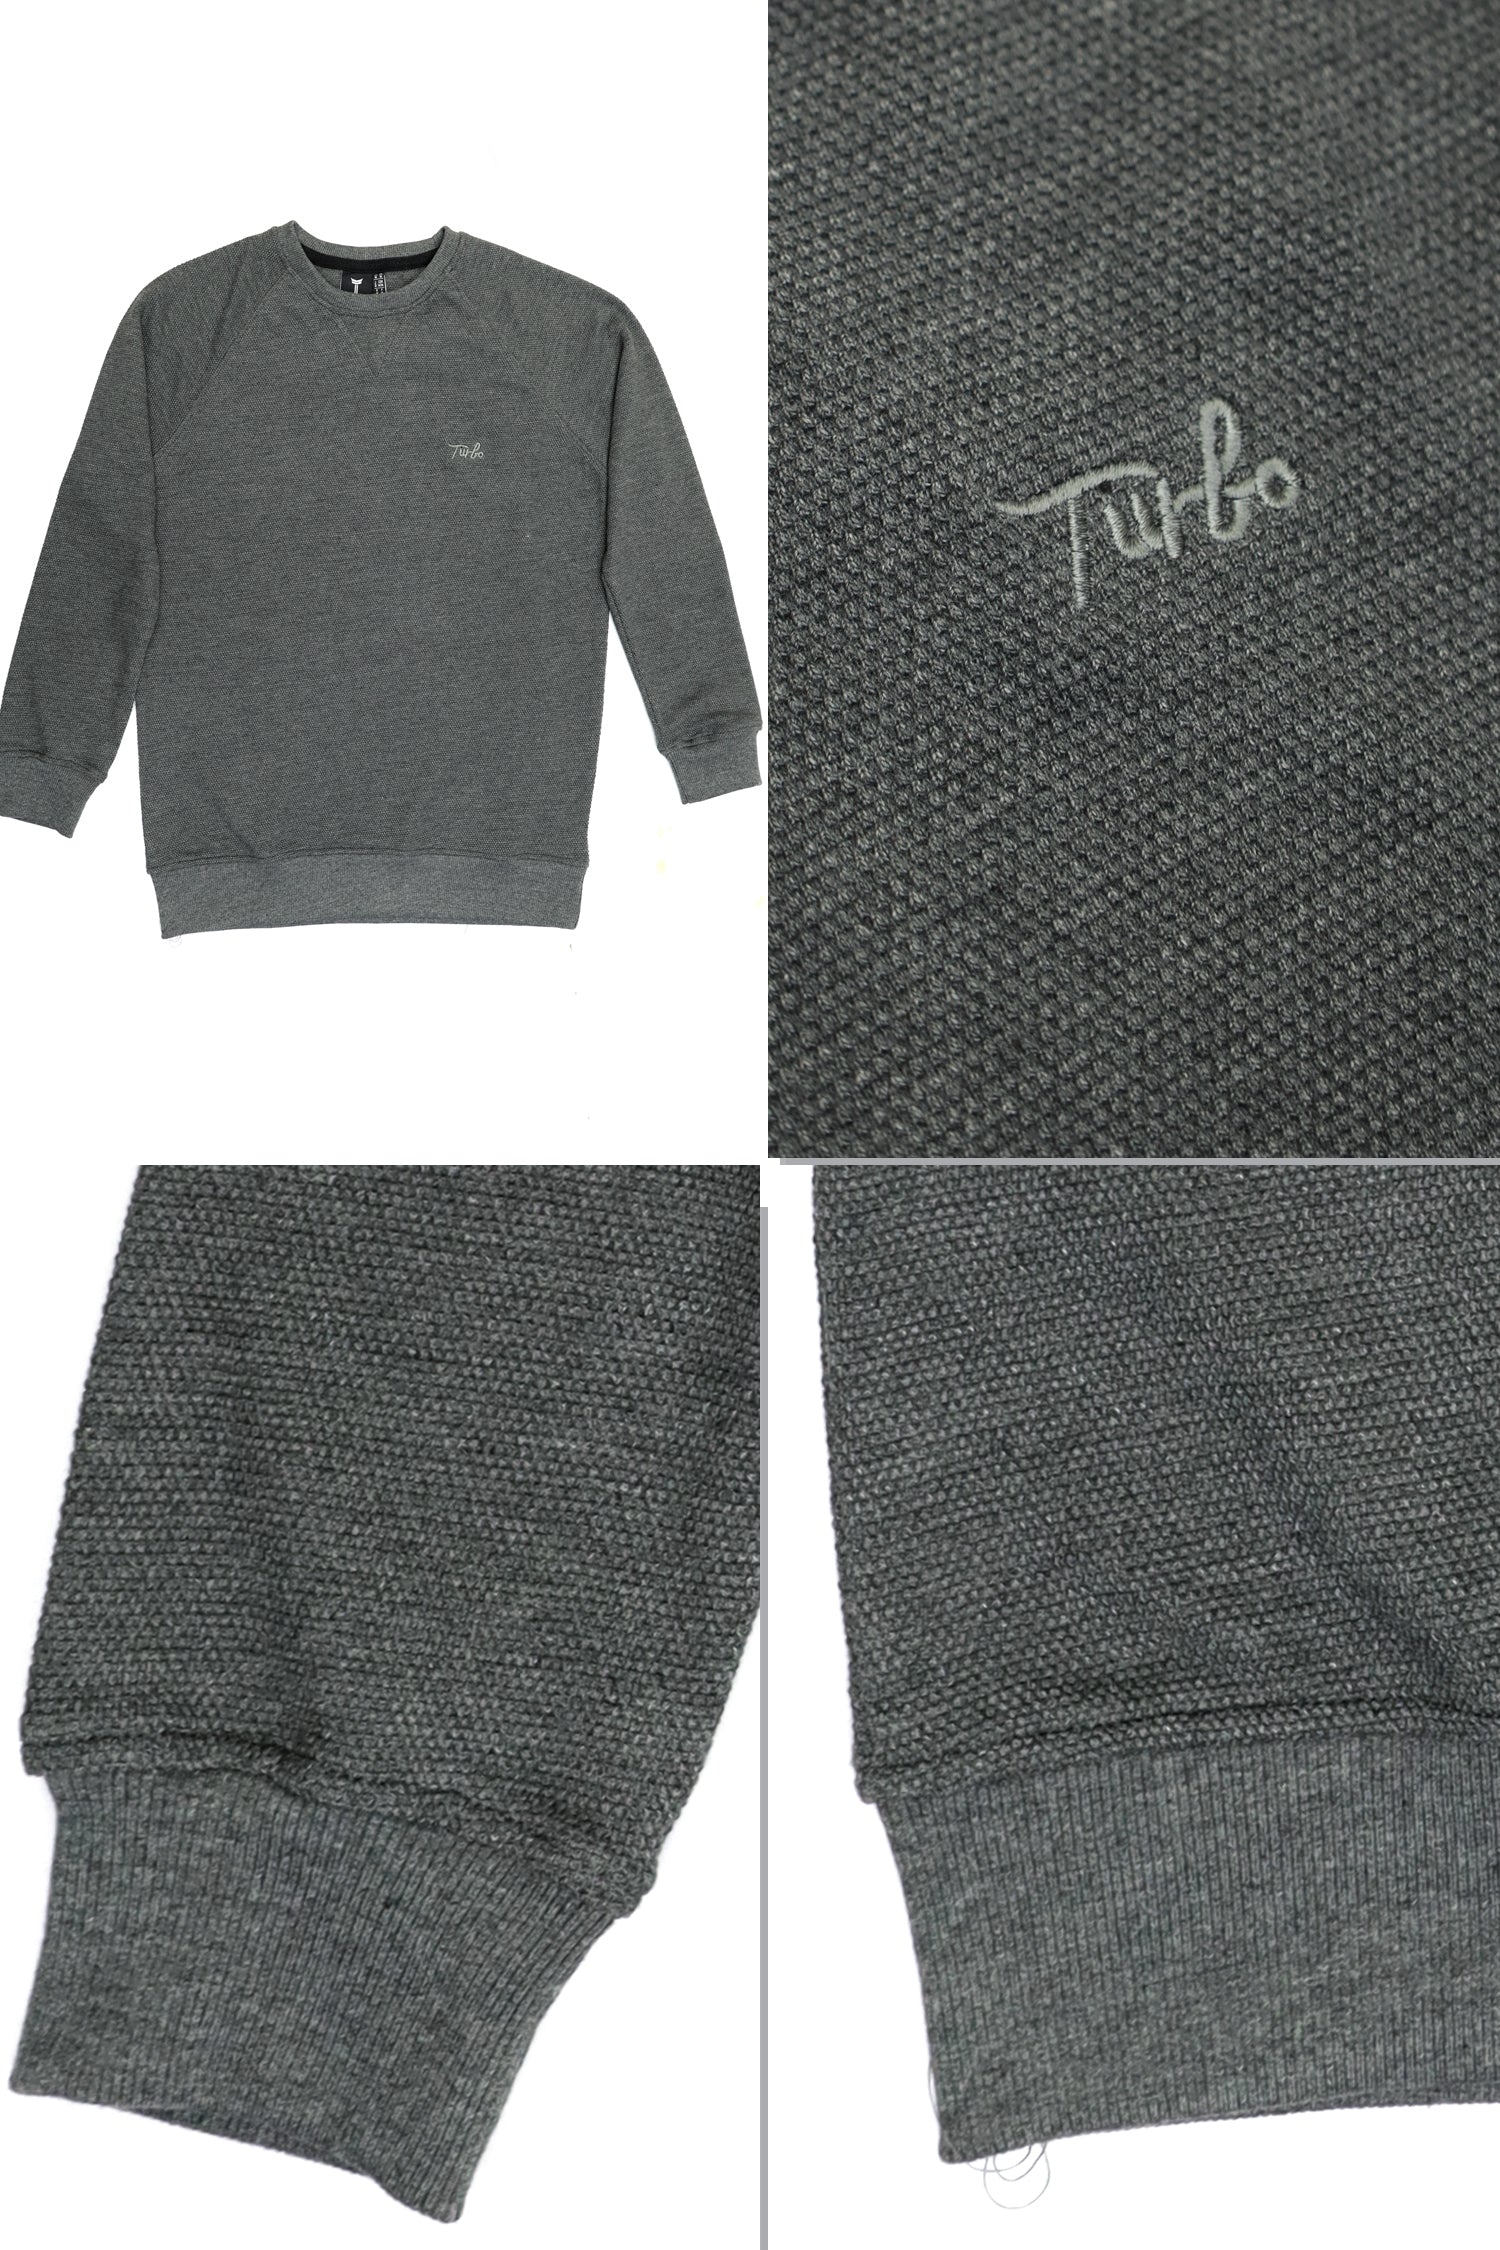 Turbo Basic Sweatshirt In Charcoal Grey